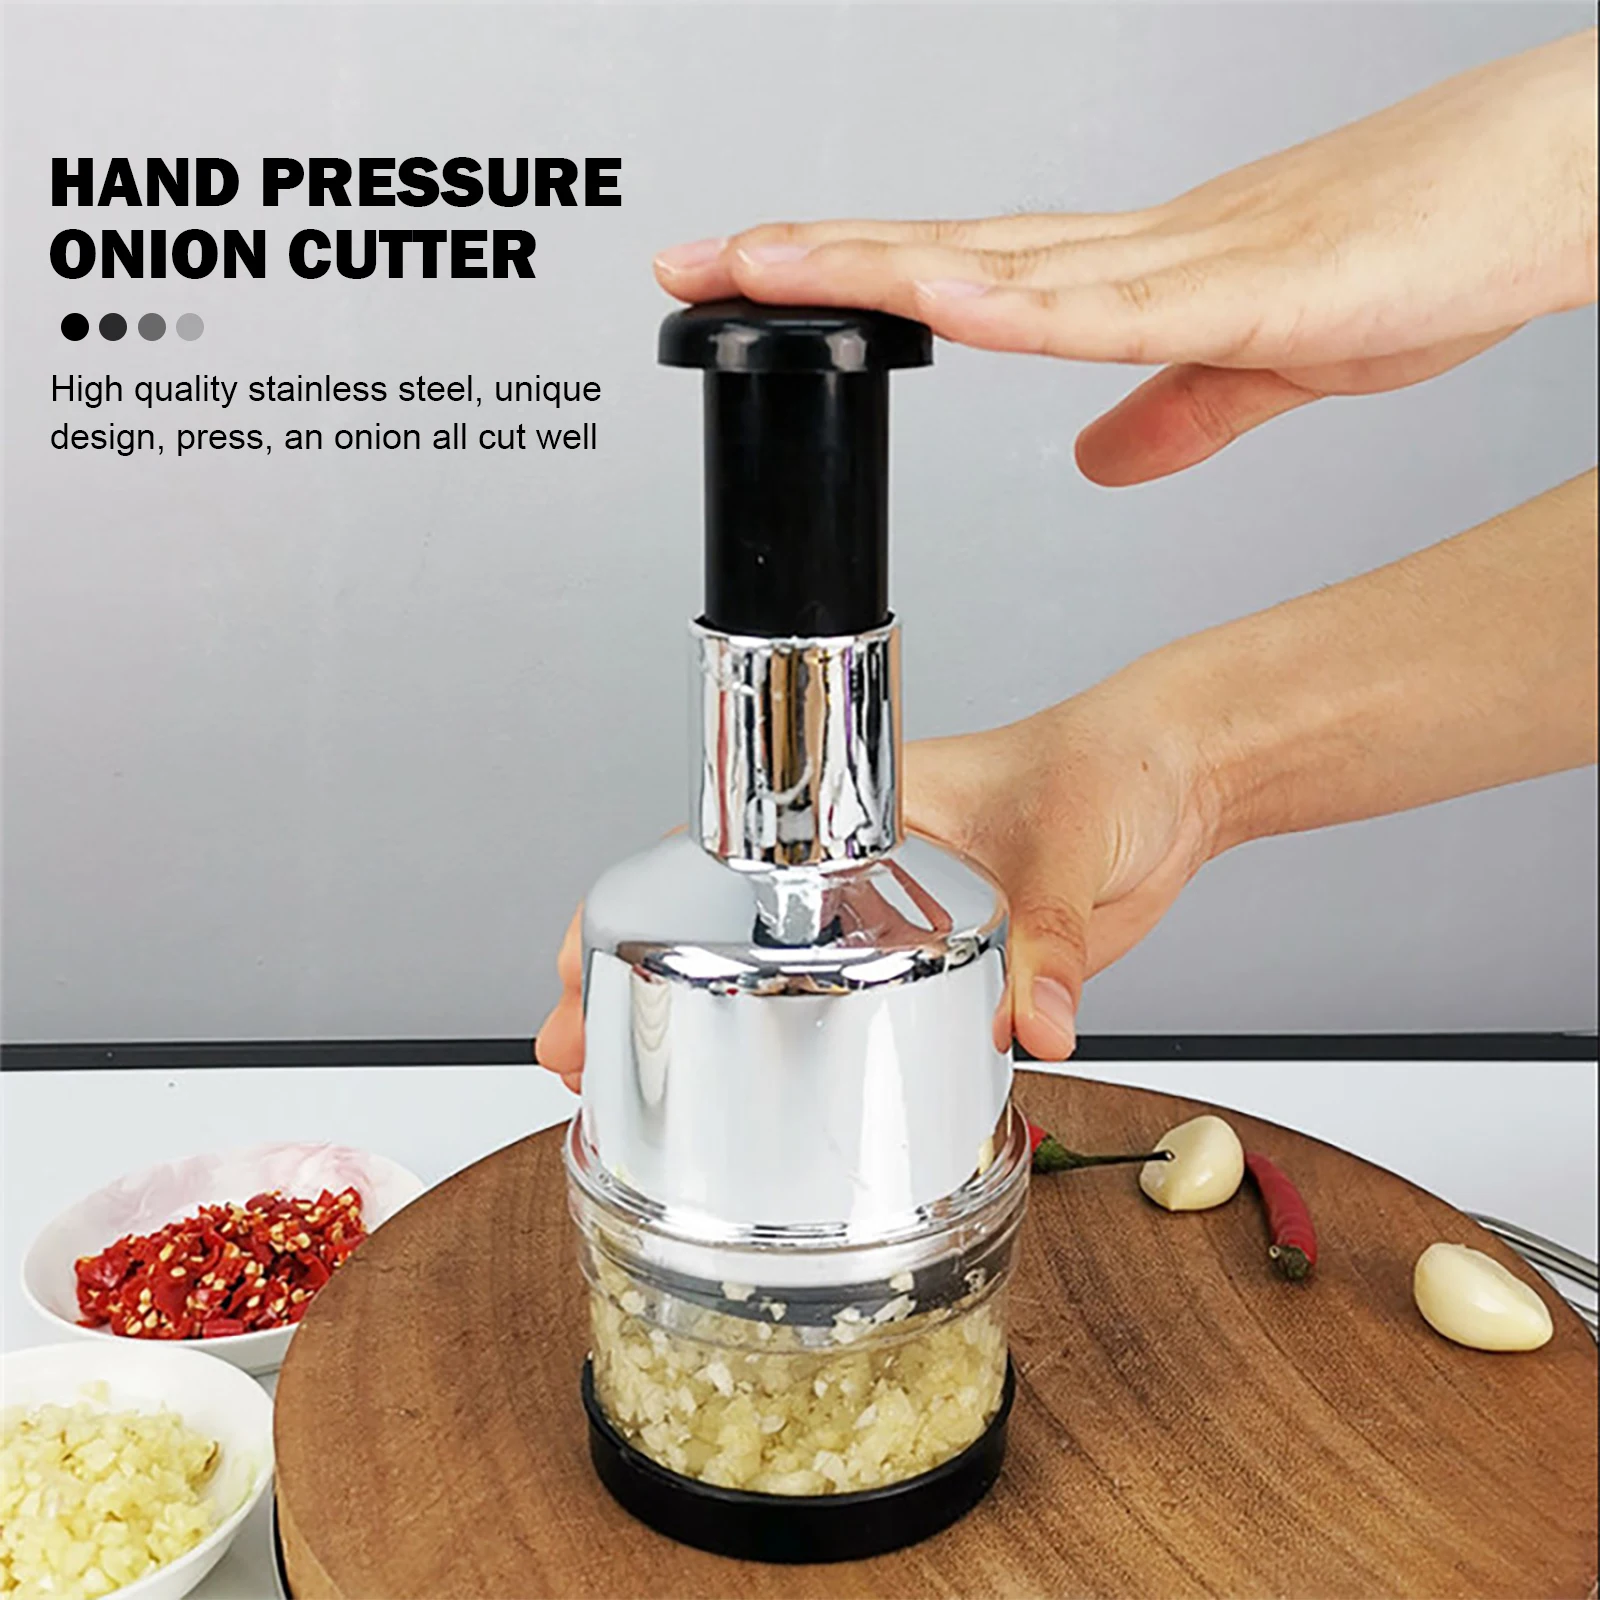 https://ae01.alicdn.com/kf/Sb0d31e77fe0c4315974cb1efe6e6d800E/Kitchen-Manual-Food-Chopper-Handheld-Slap-Press-Chopper-Mincer-for-Onions-Garlic-Nuts-Efficient-Garlic-Onion.jpg